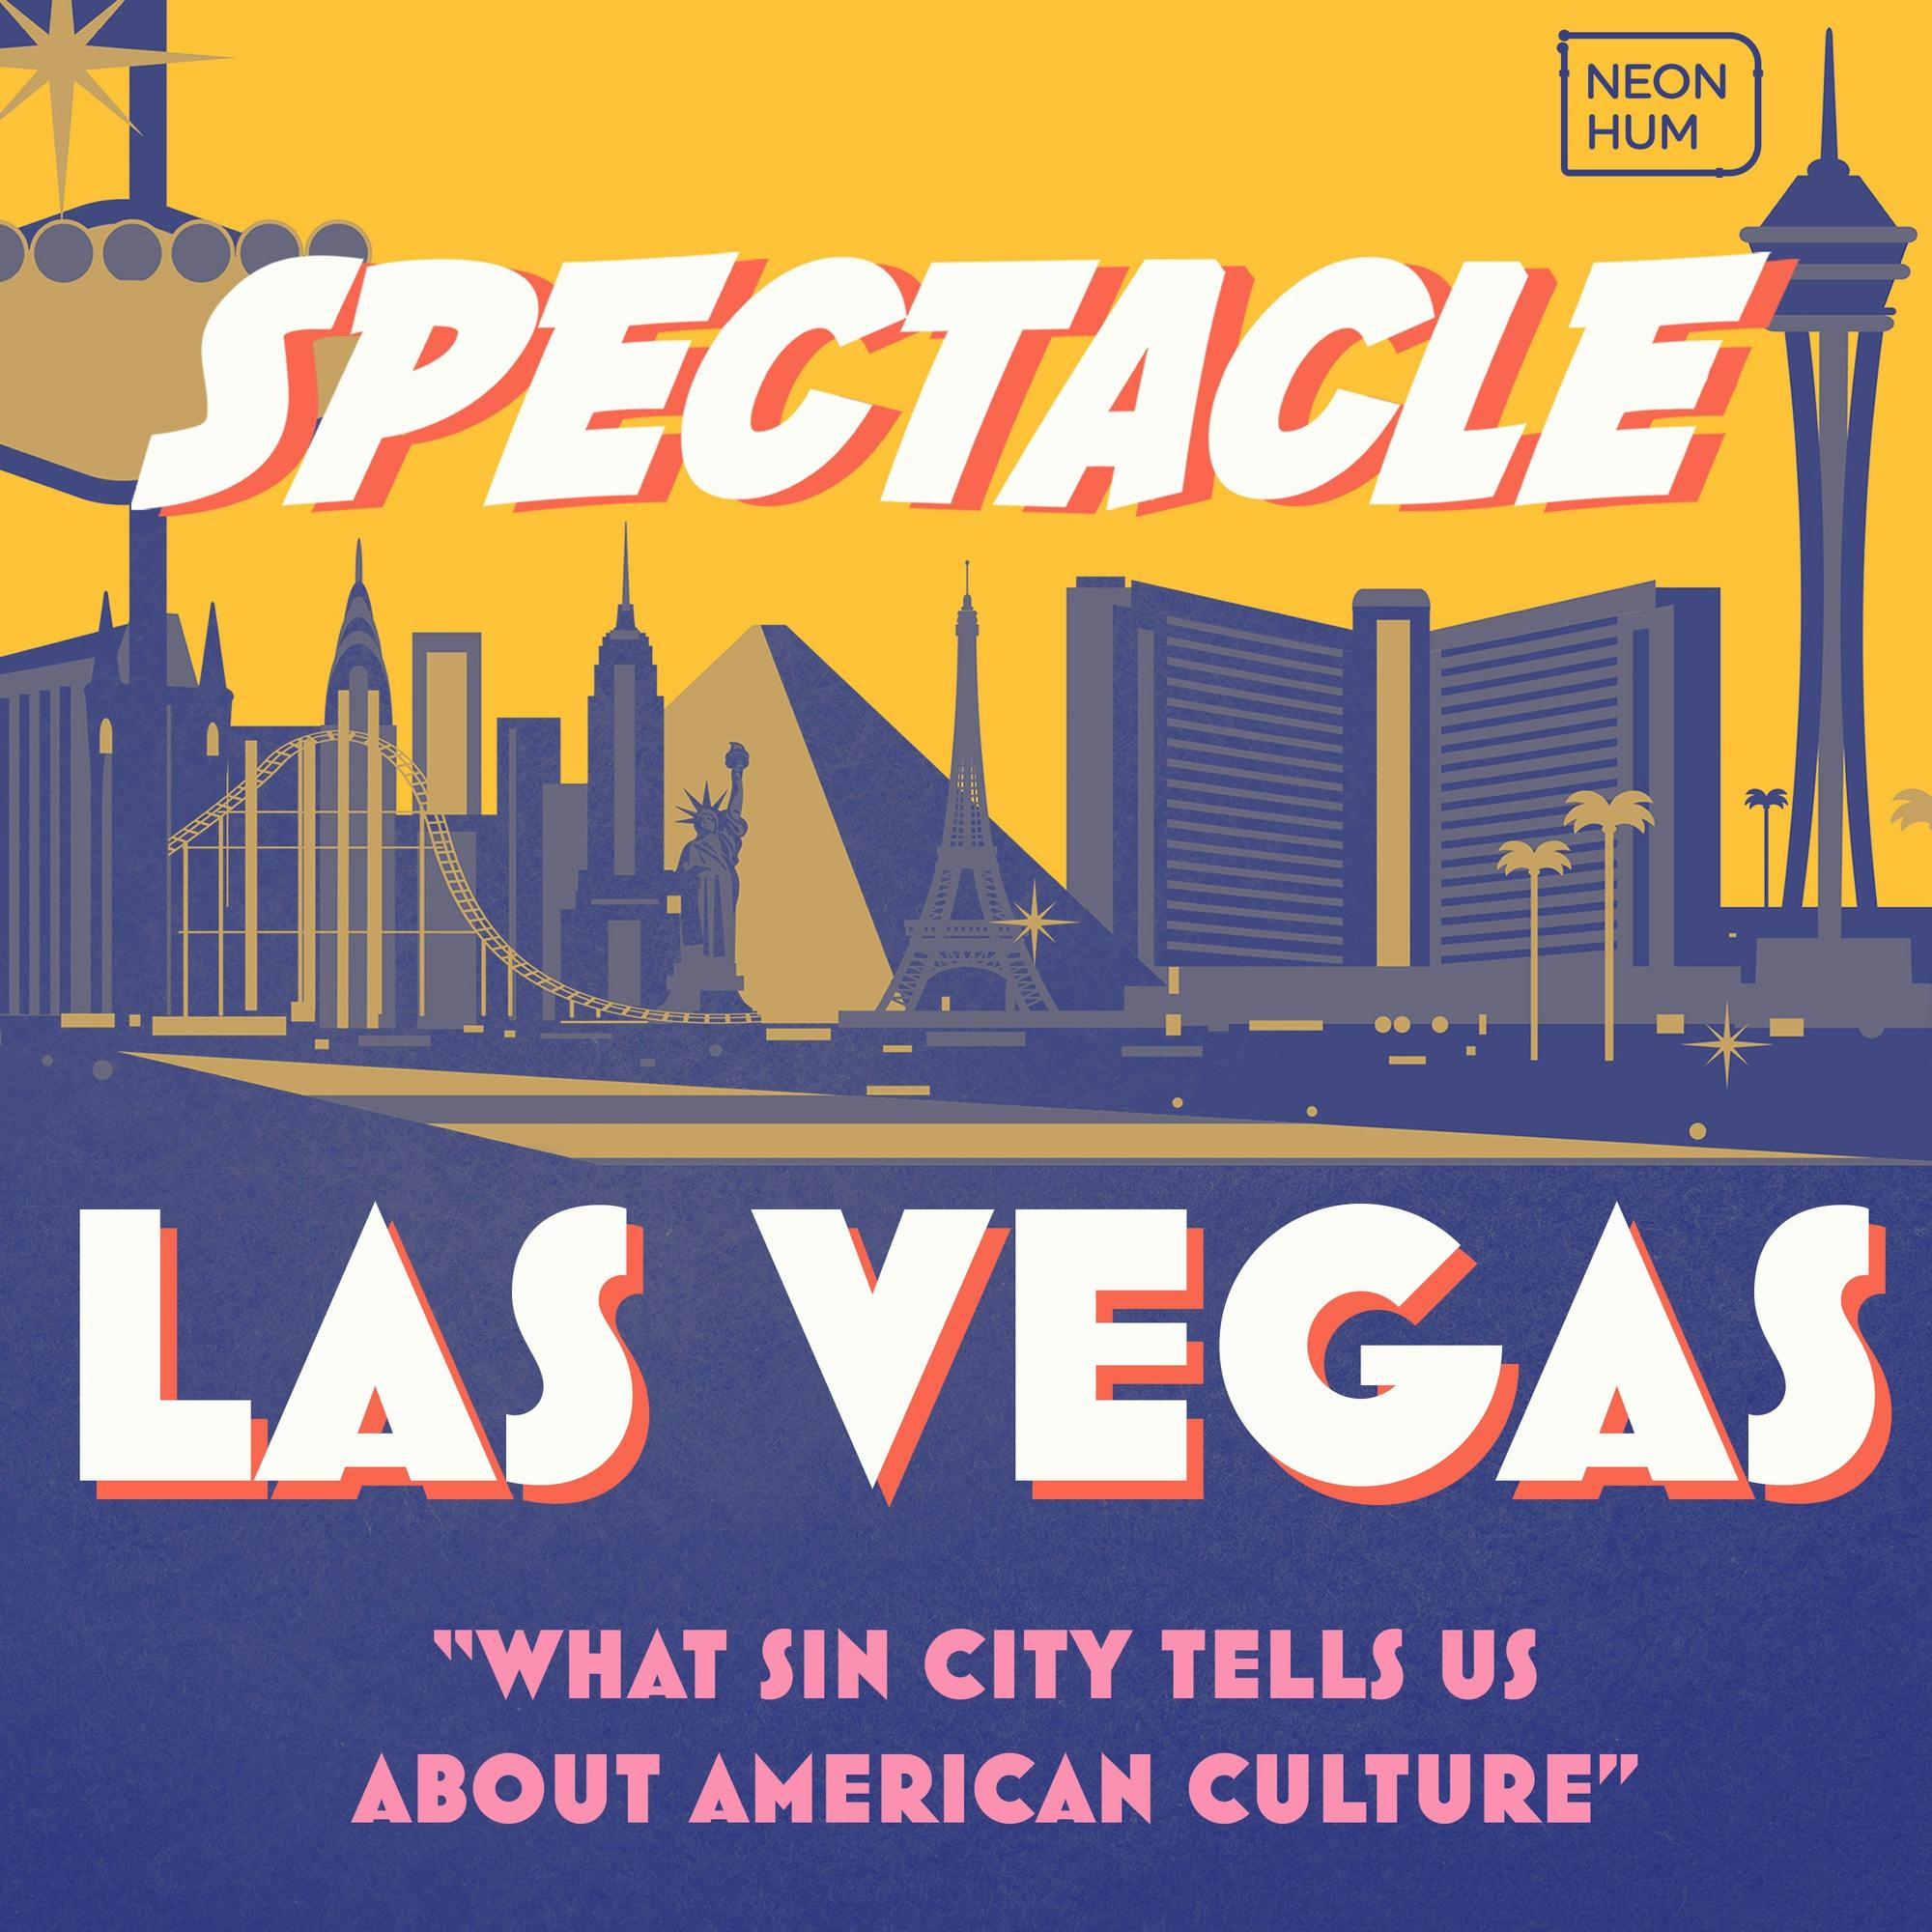 Introducing Spectacle: Las Vegas